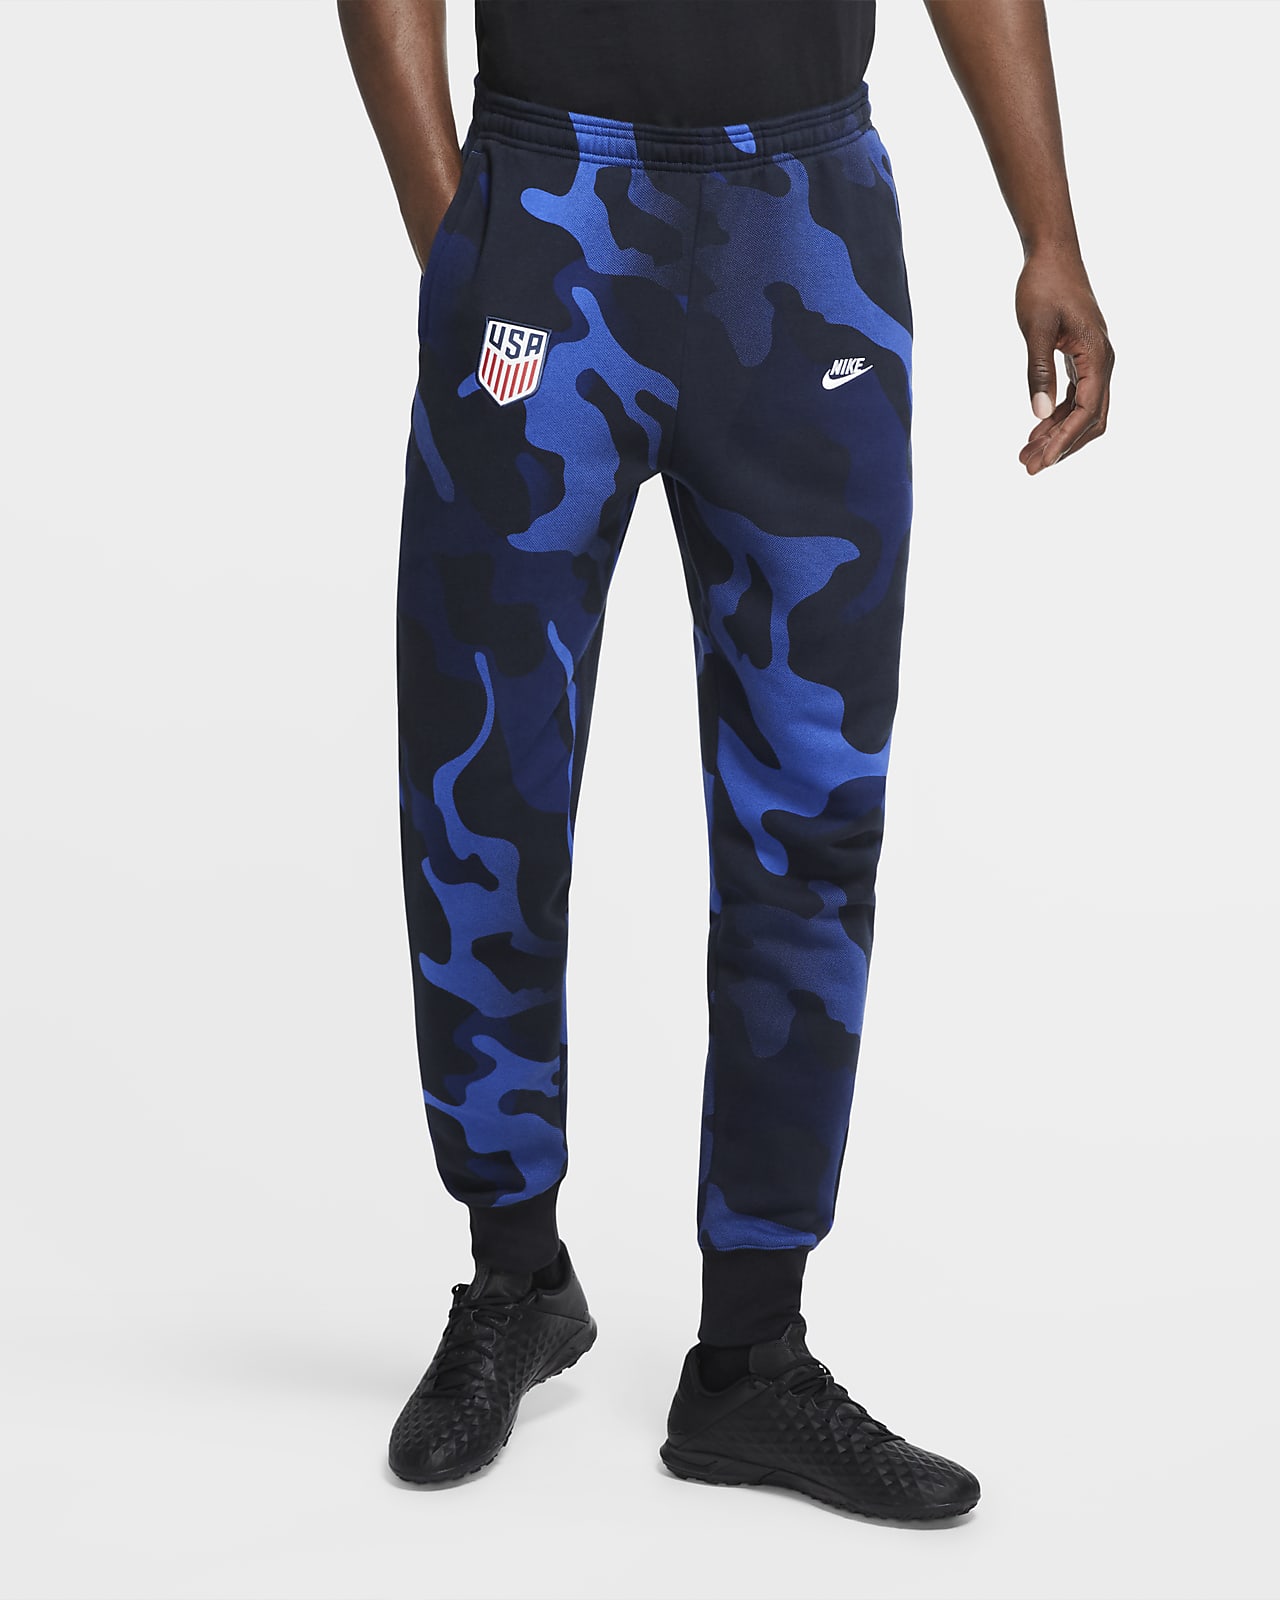 U.S. Men's Fleece Soccer Pants. Nike.com